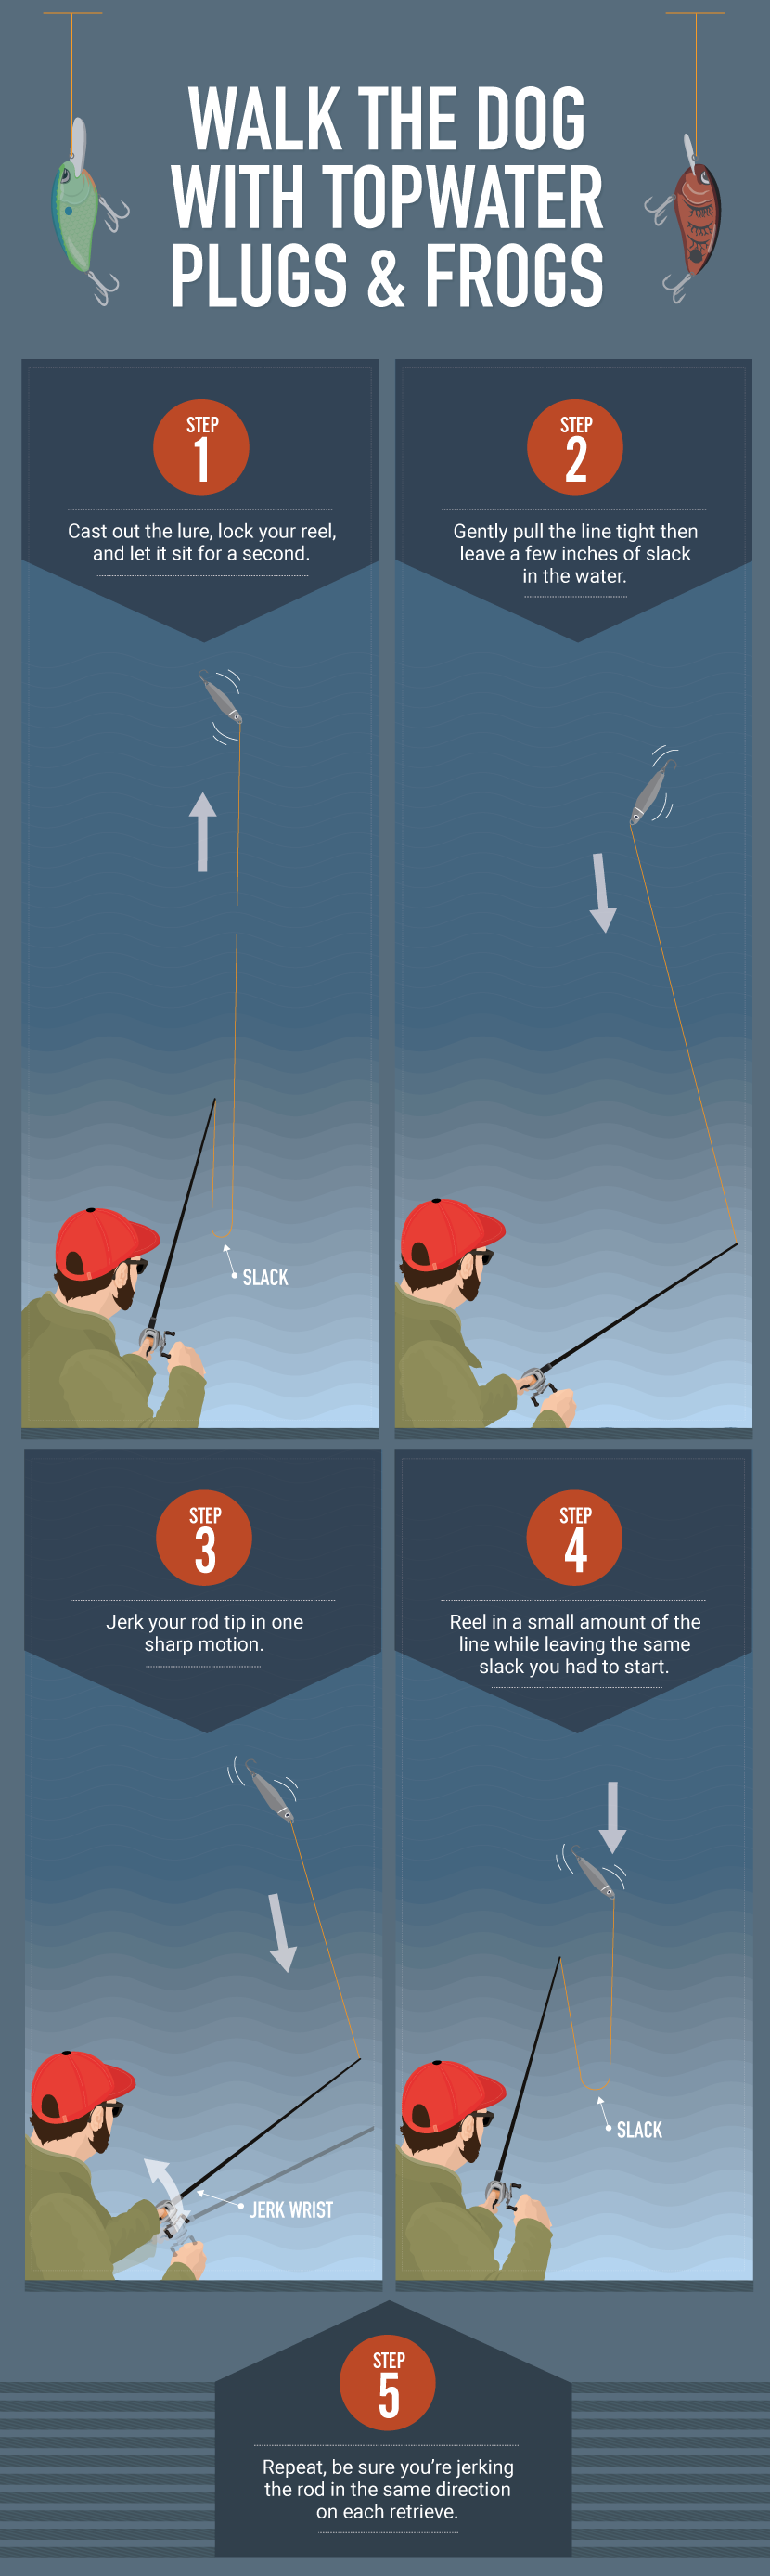 Walk The Dog - Rod Tricks Every Angler Should Know